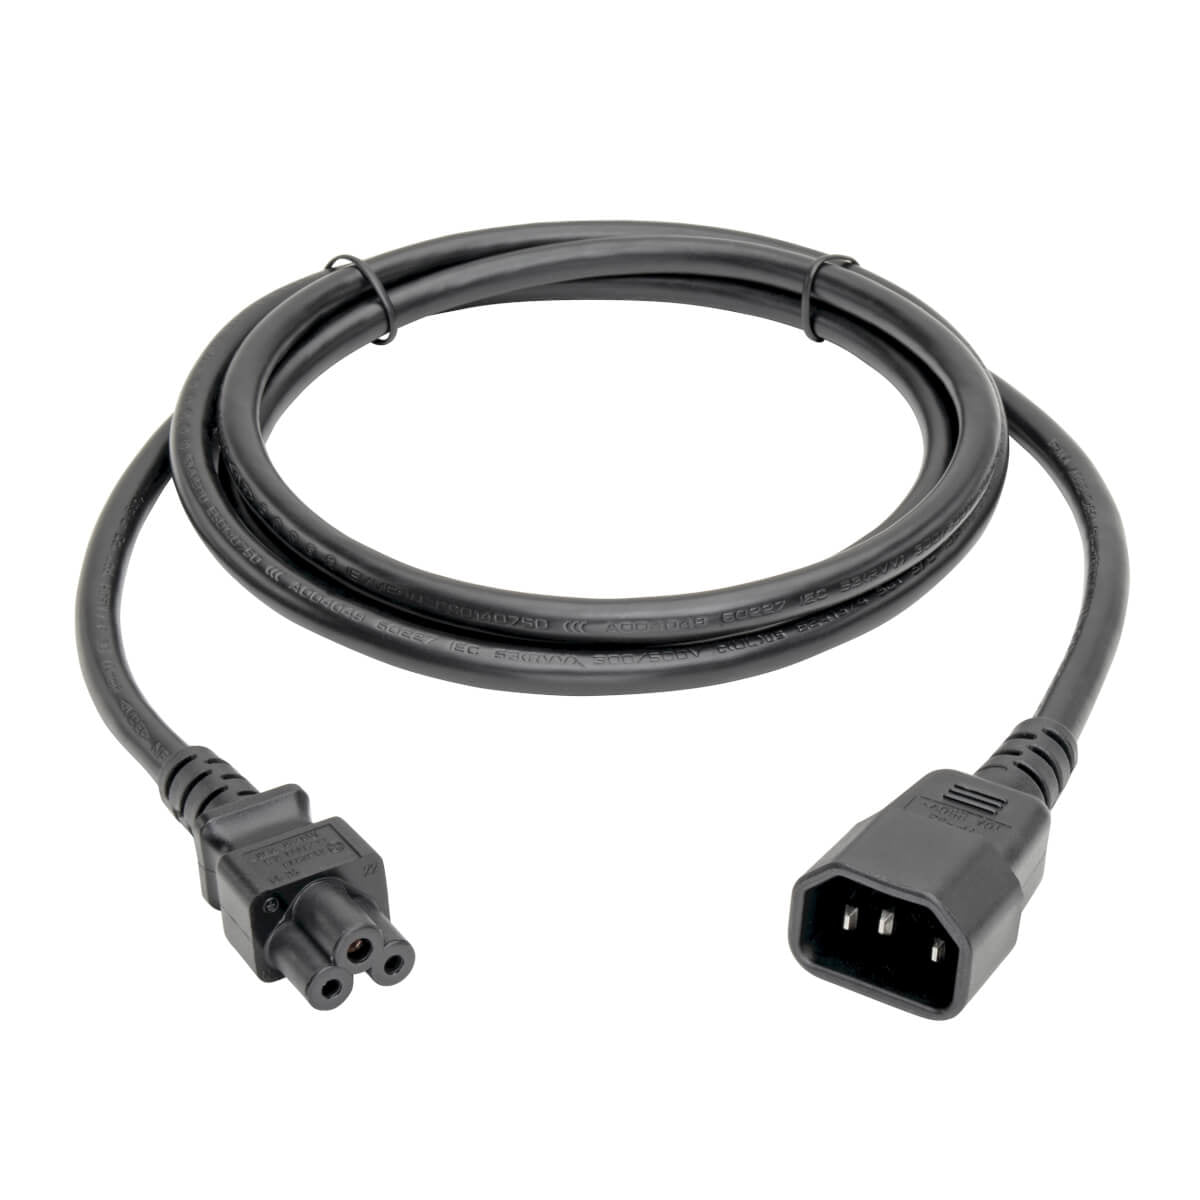 Cable de Poder Tripp Lite P014-006, C14 Macho - C5 Hembra, 1.83 Metros